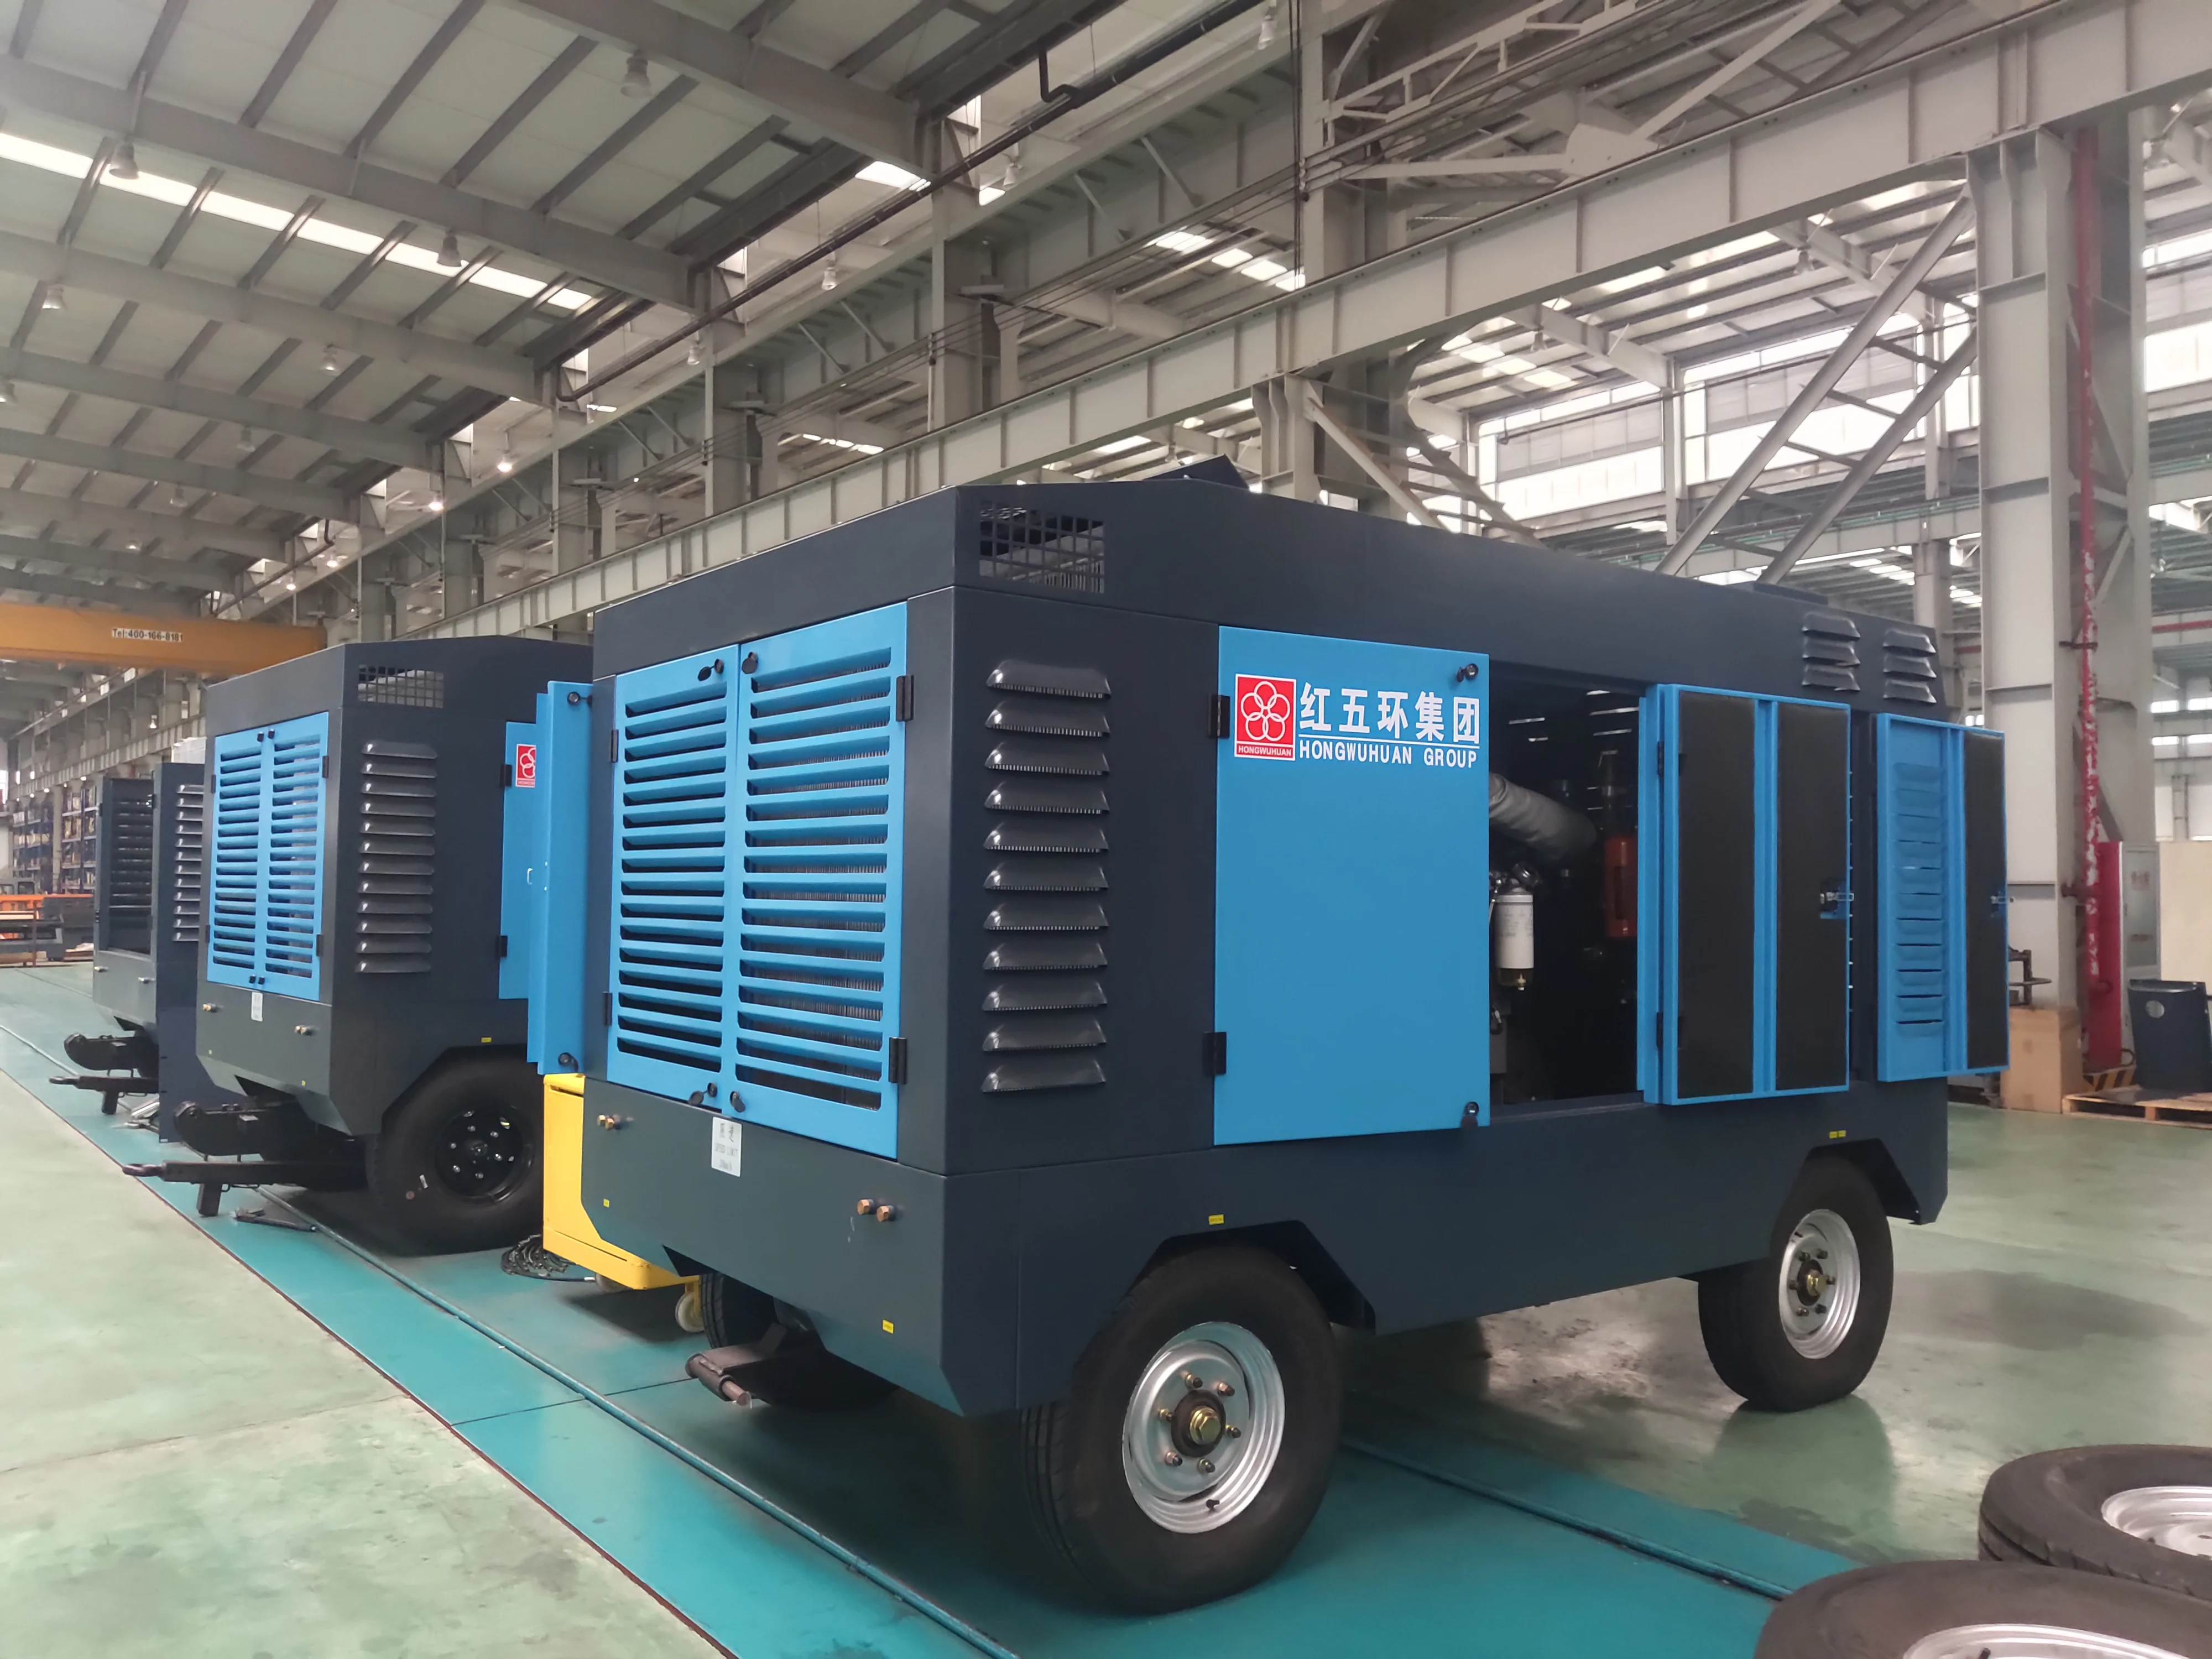 Hot sale China diesel screw air compressor hongwuhuan HGS32-25 32 m3/min 25 bar 295 kw  for drilling